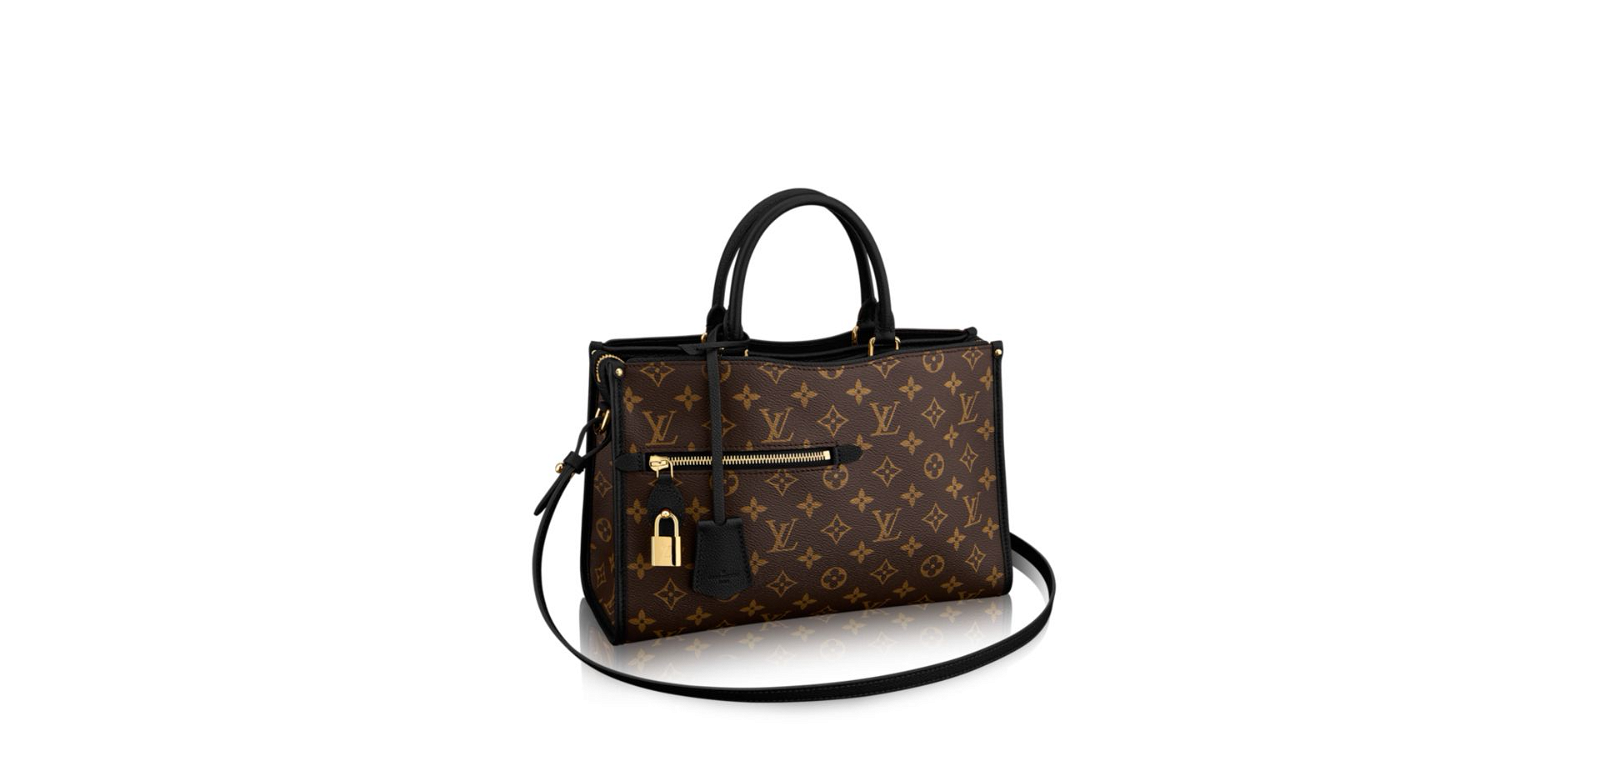 Hot selling women handbag LV handbag louis vuitton bag - LV bag (China Trading Company ...